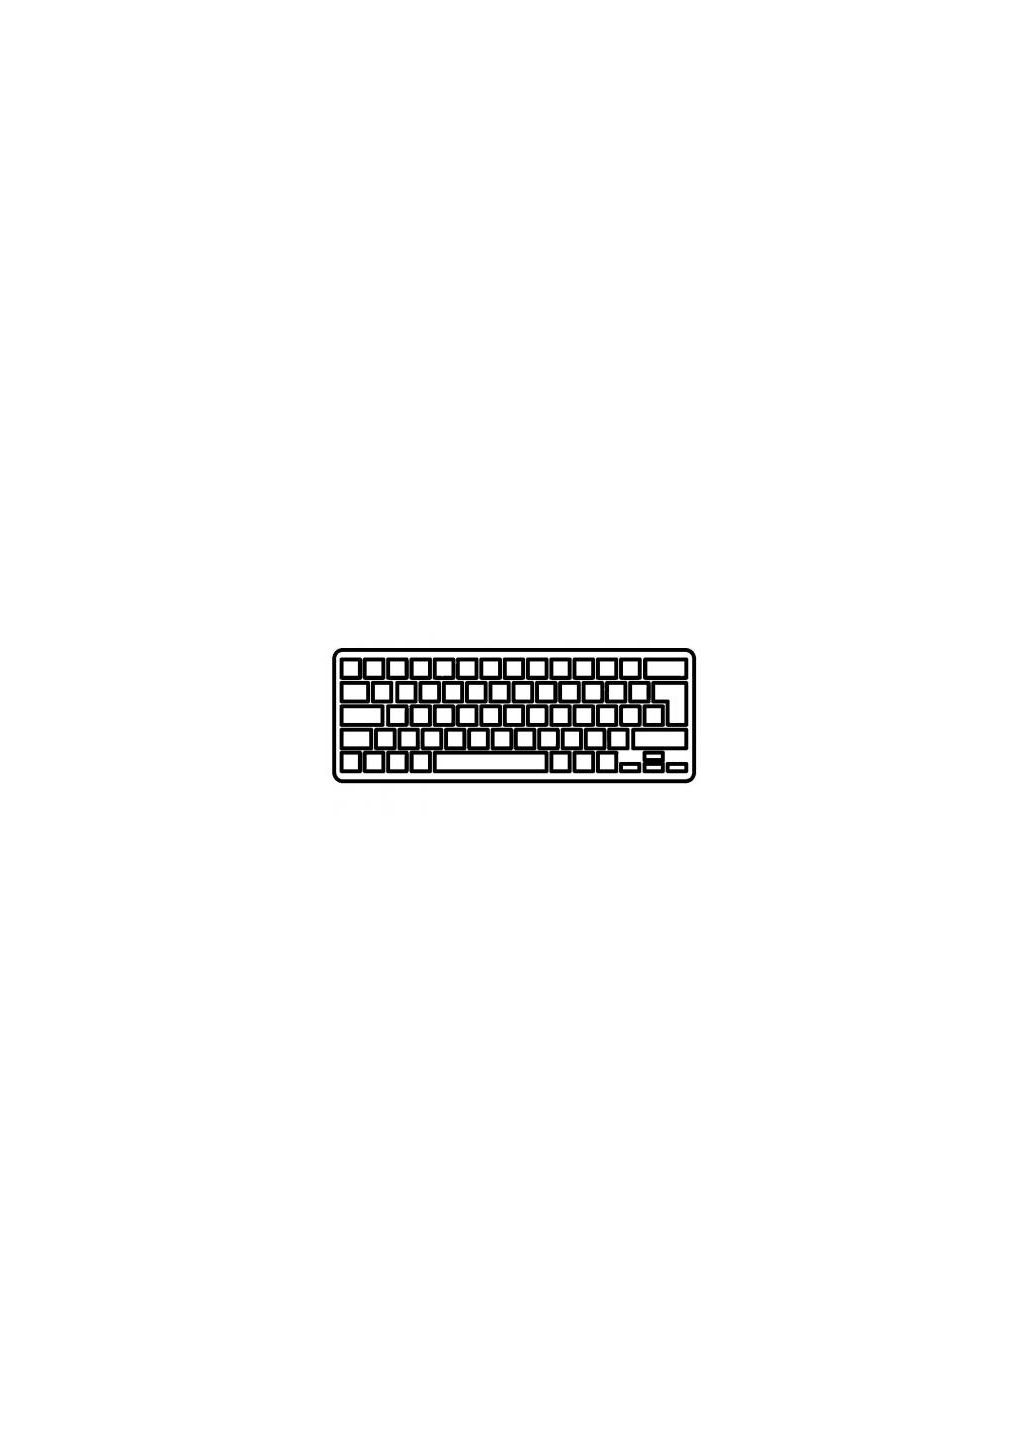 Клавиатура ноутбука ная RU (A43004) Acer aspire 3100/5100/5610/9110/extensa 5200 series чер (276706607)